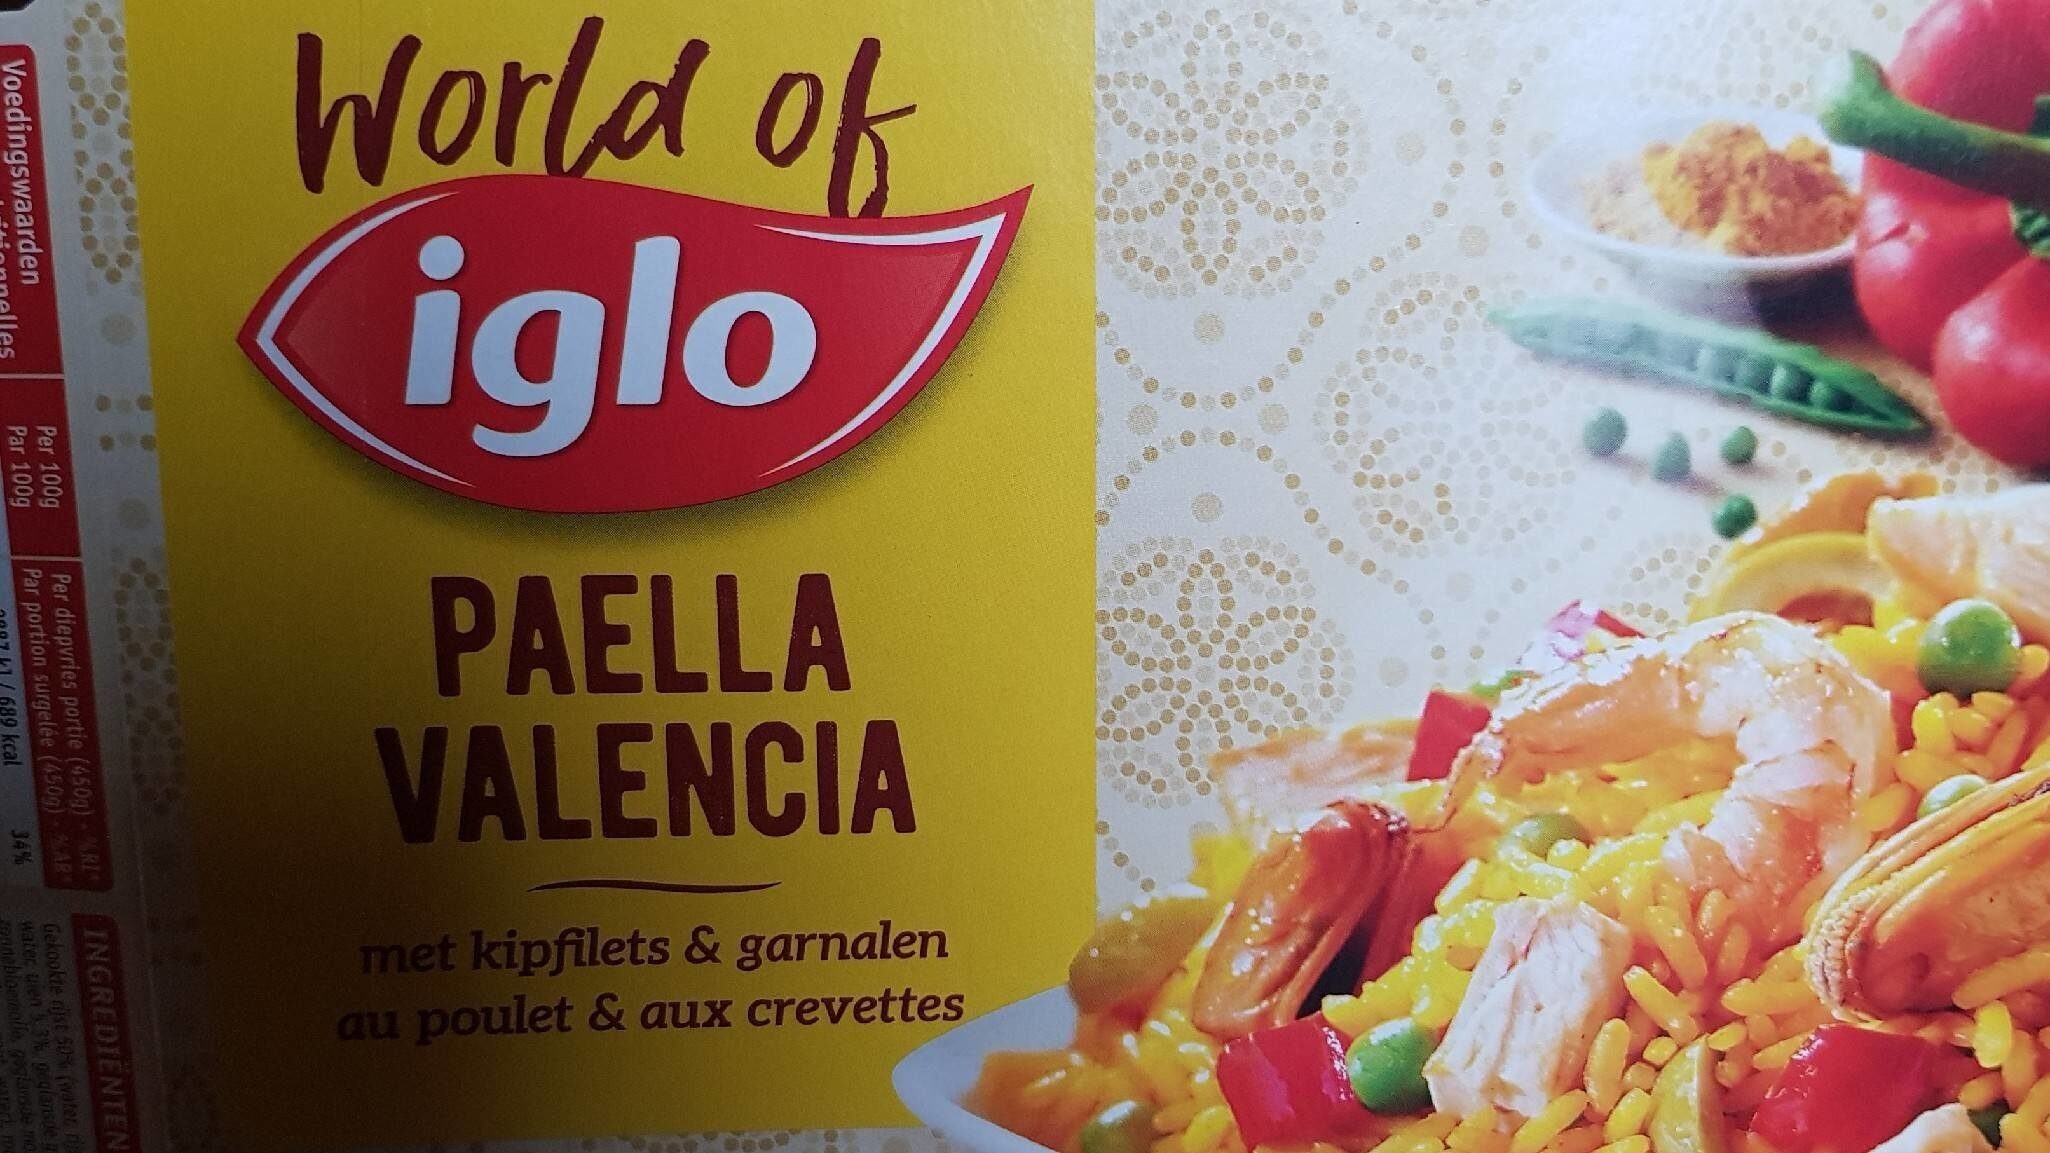 Paella valencia - Product - fr